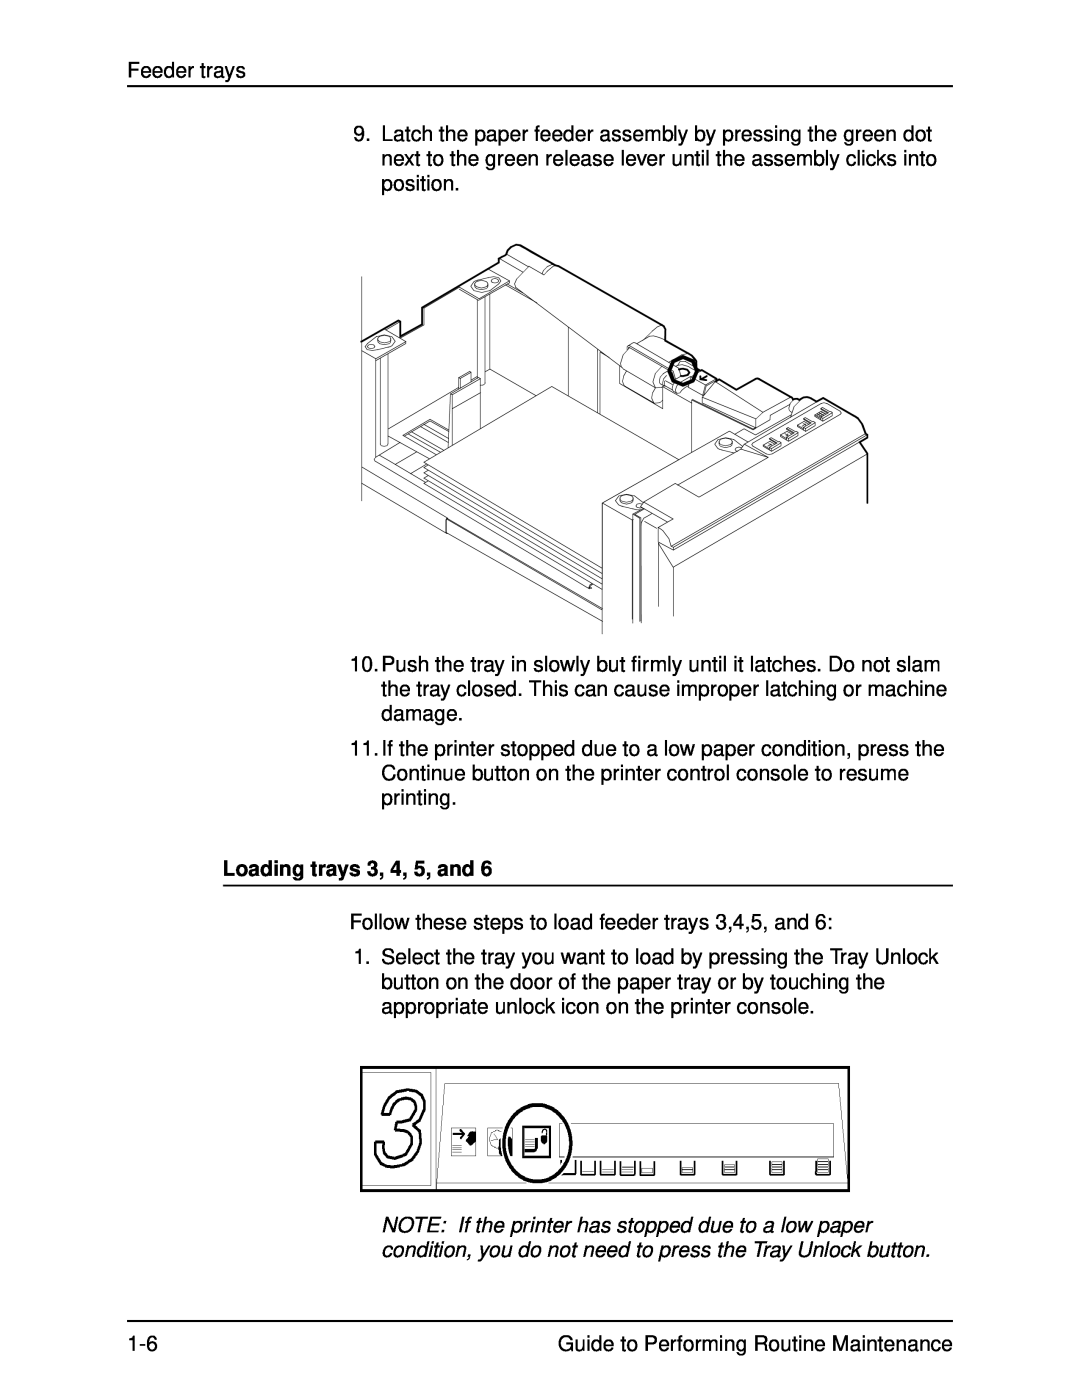 Xerox DocuPrint 96 manual Loading trays 3, 4, 5, and 